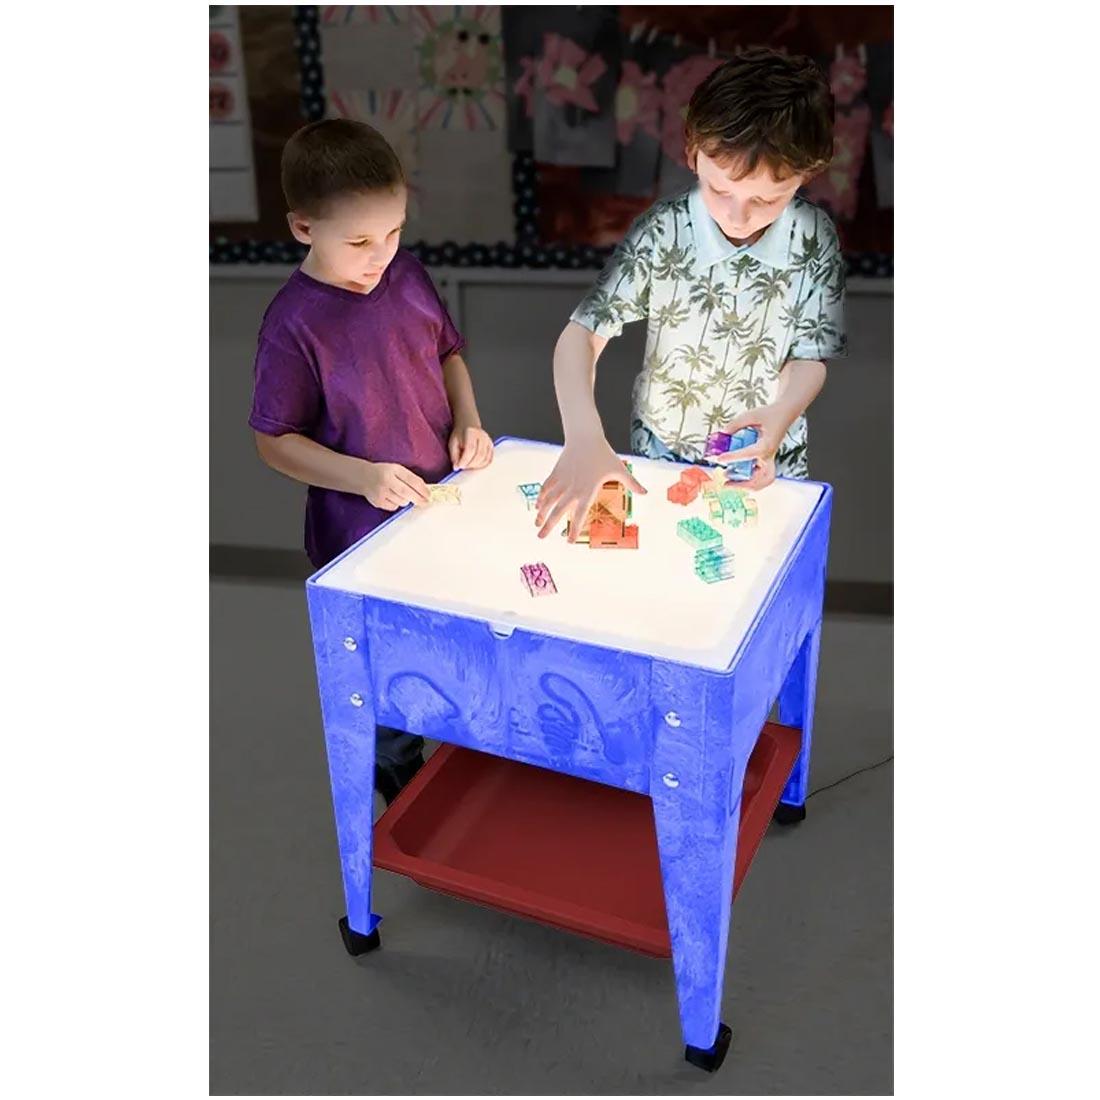 Illumi Mite Light Table by ChildBrite